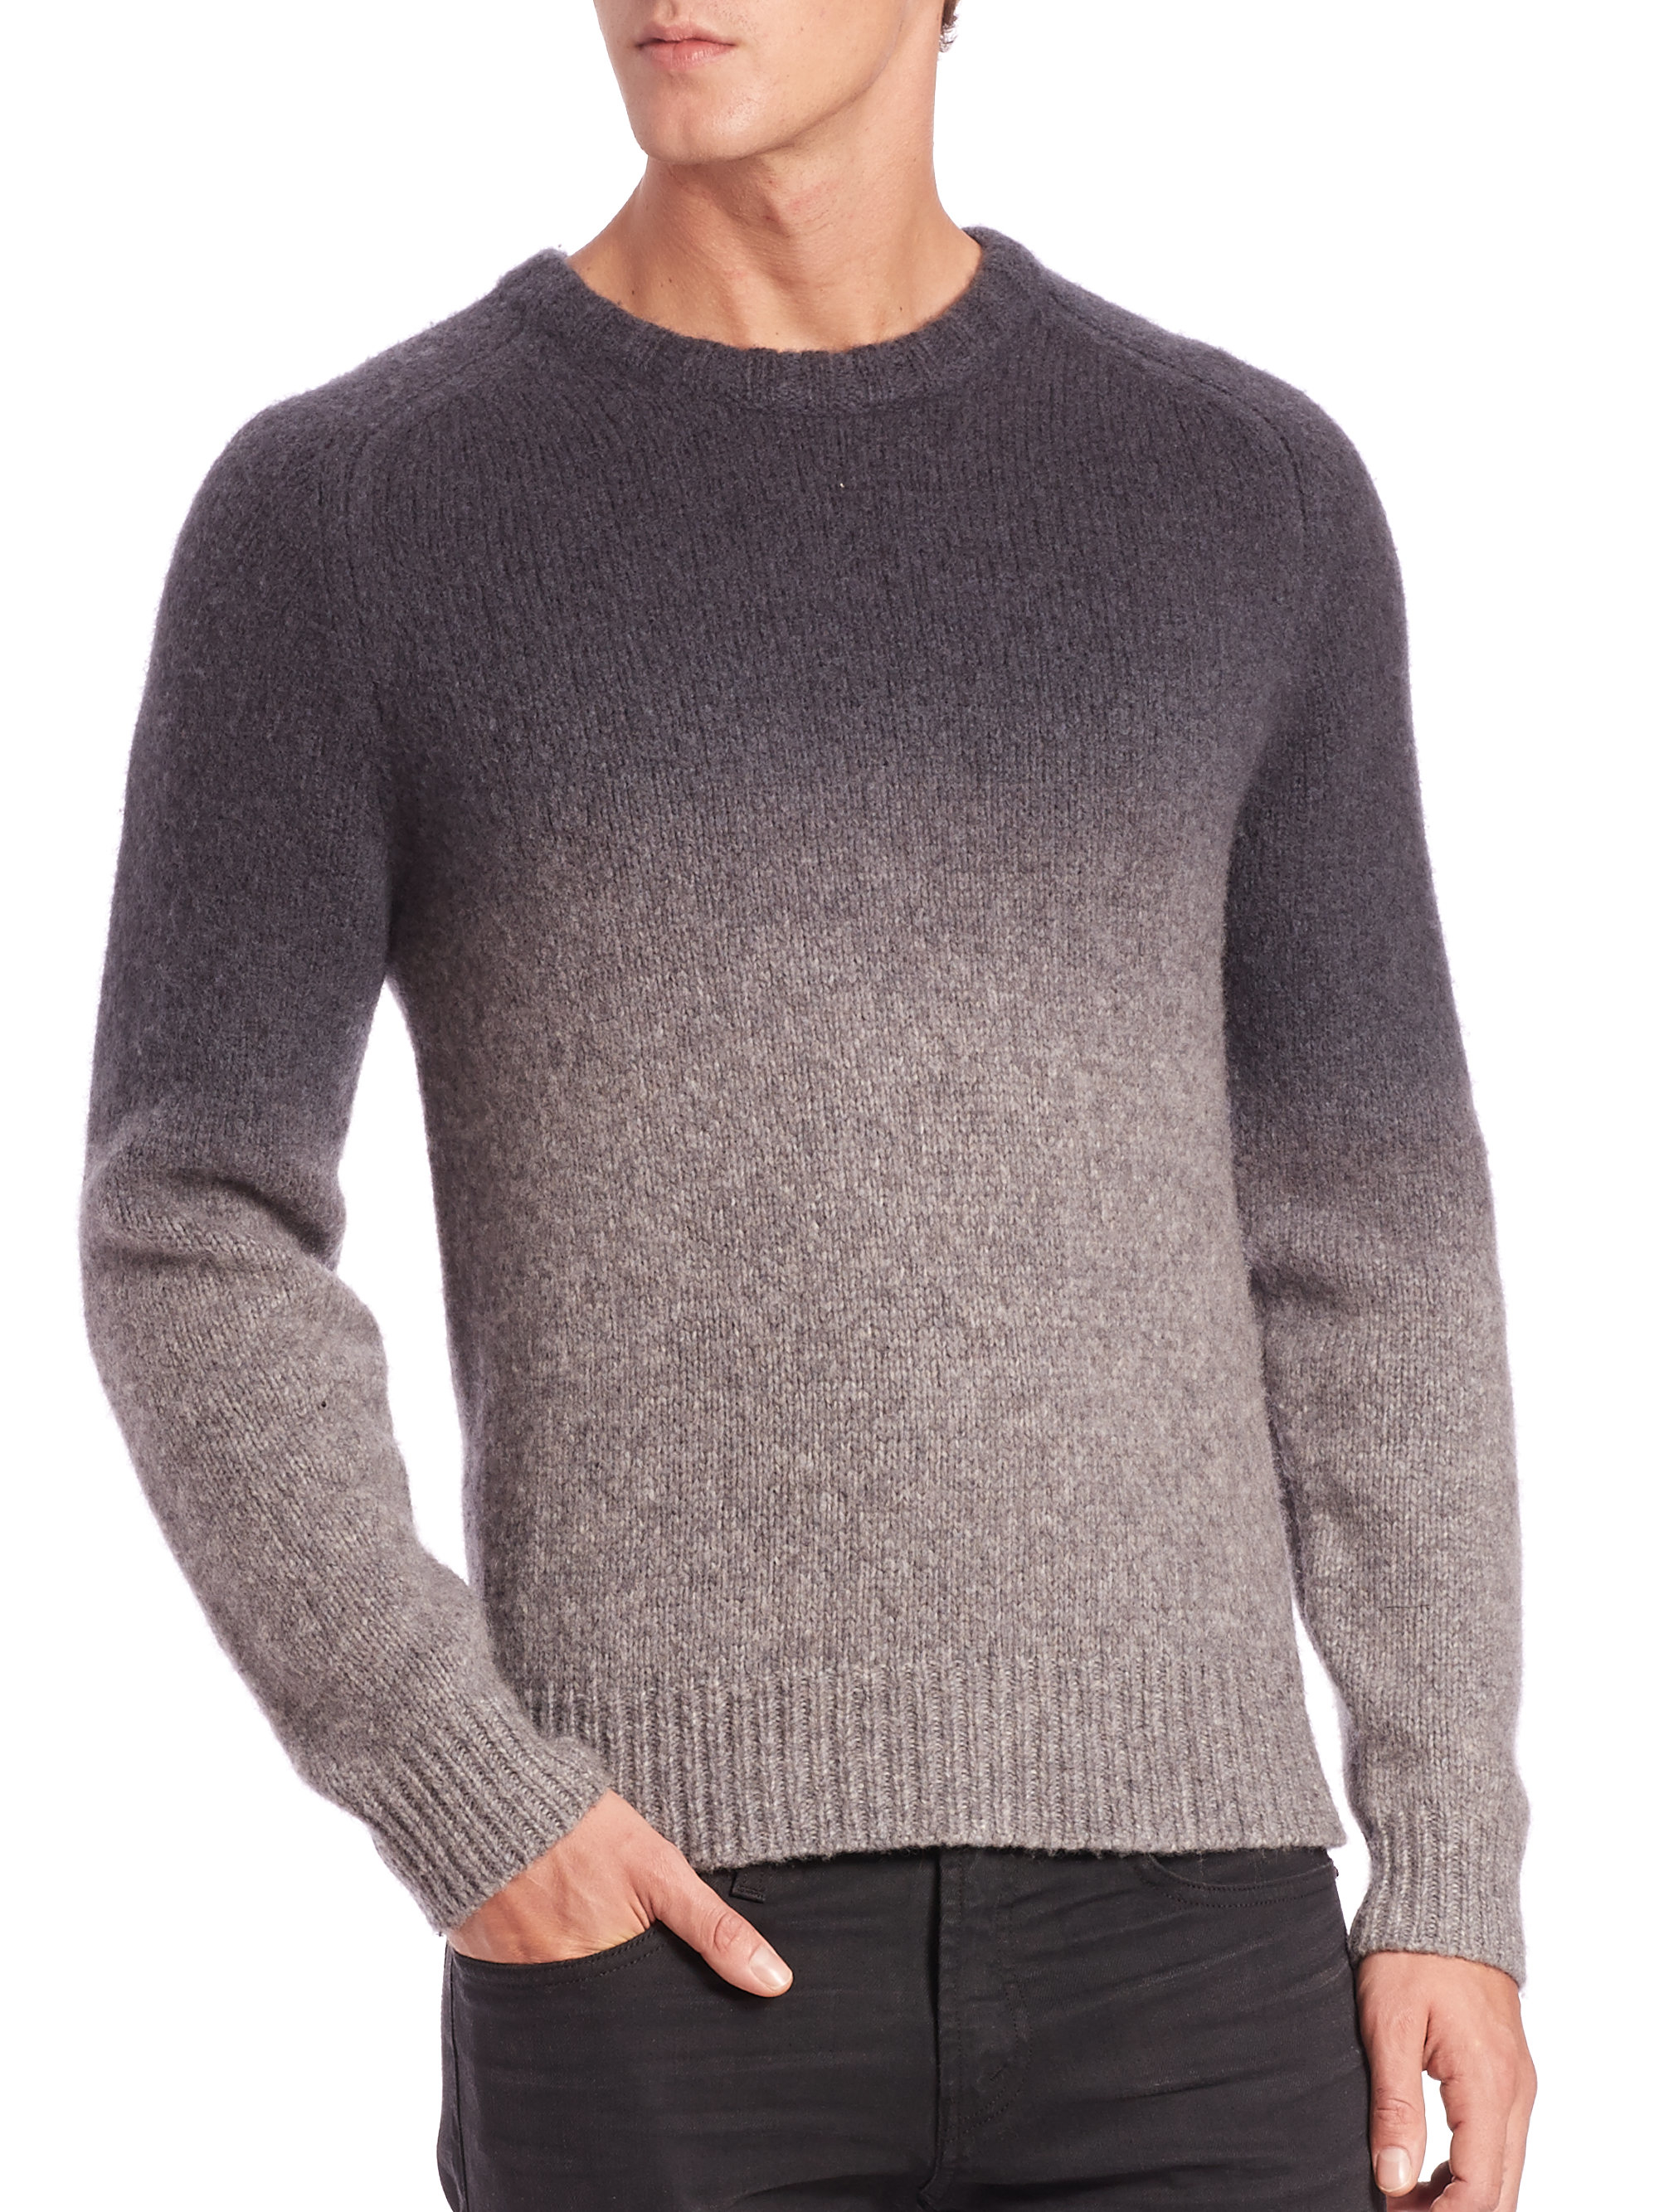 Lyst - J Brand Haze Dip-dye Crewneck Sweater in Gray for Men